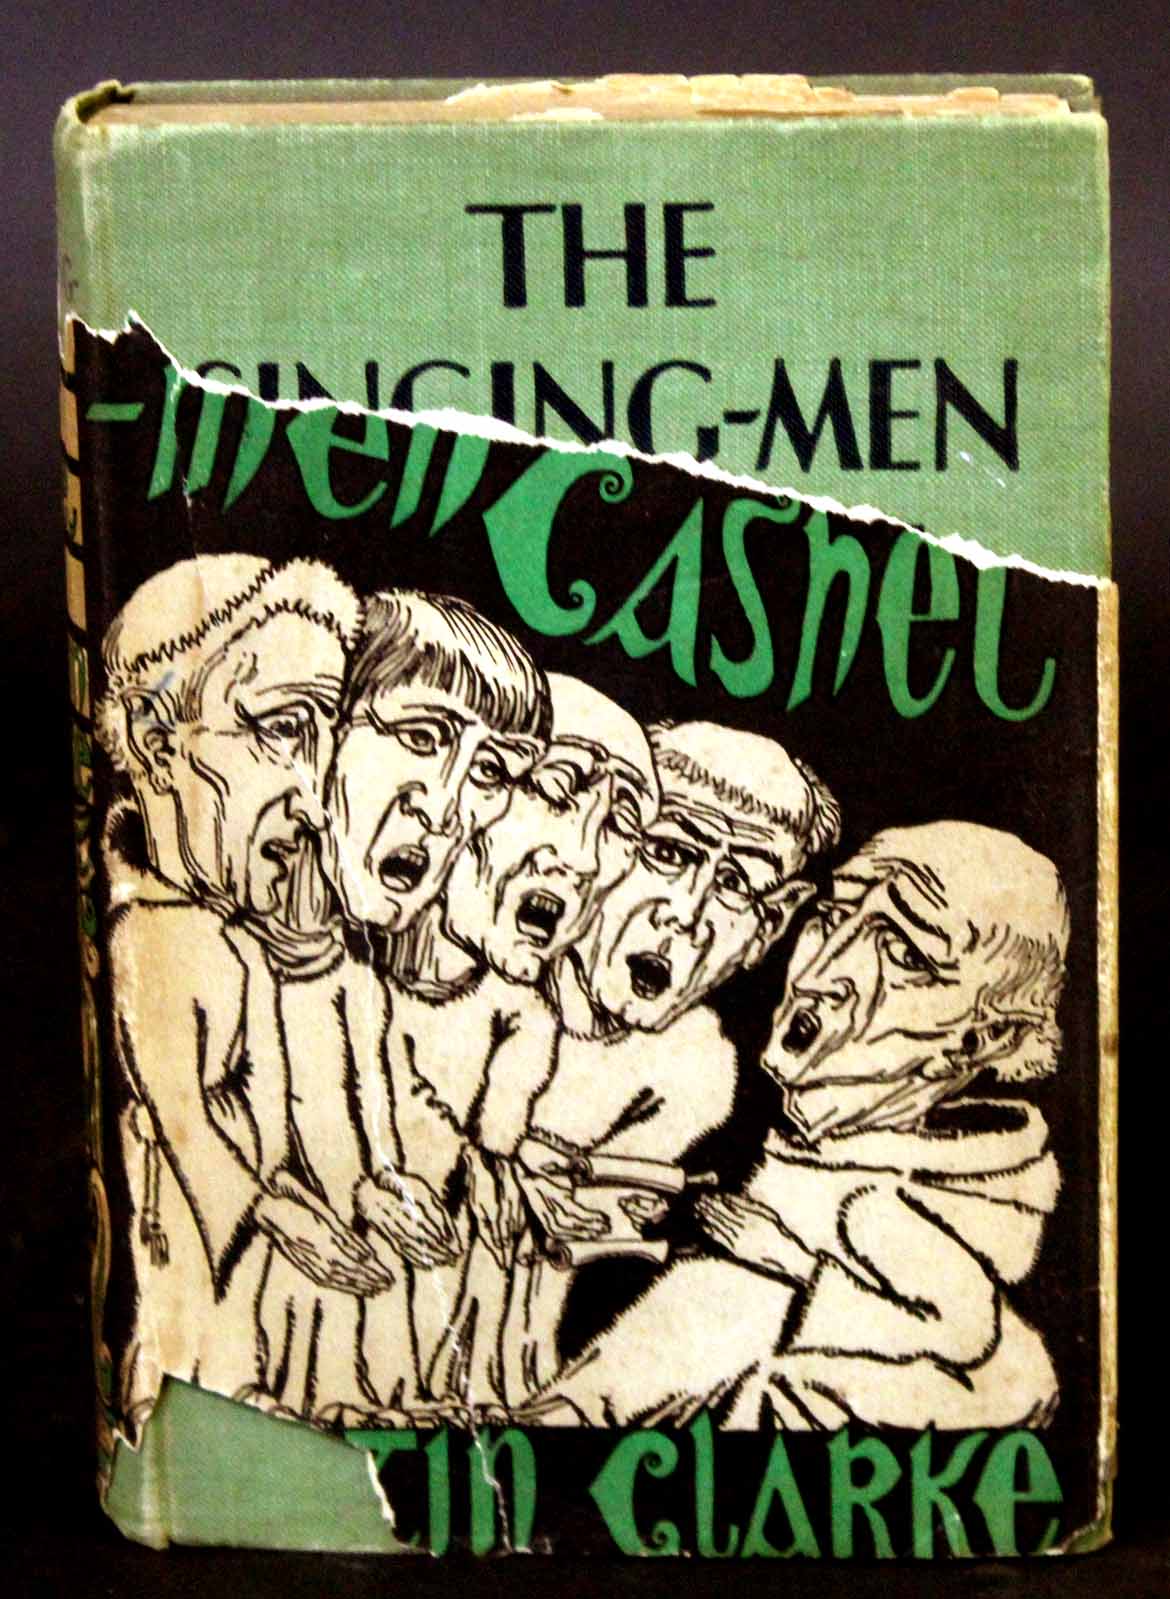 AUSTIN CLARKE: THE SINGING-MEN AT CASHEL, London, George, Allen & Unwin, 1936, 1st edition, signed